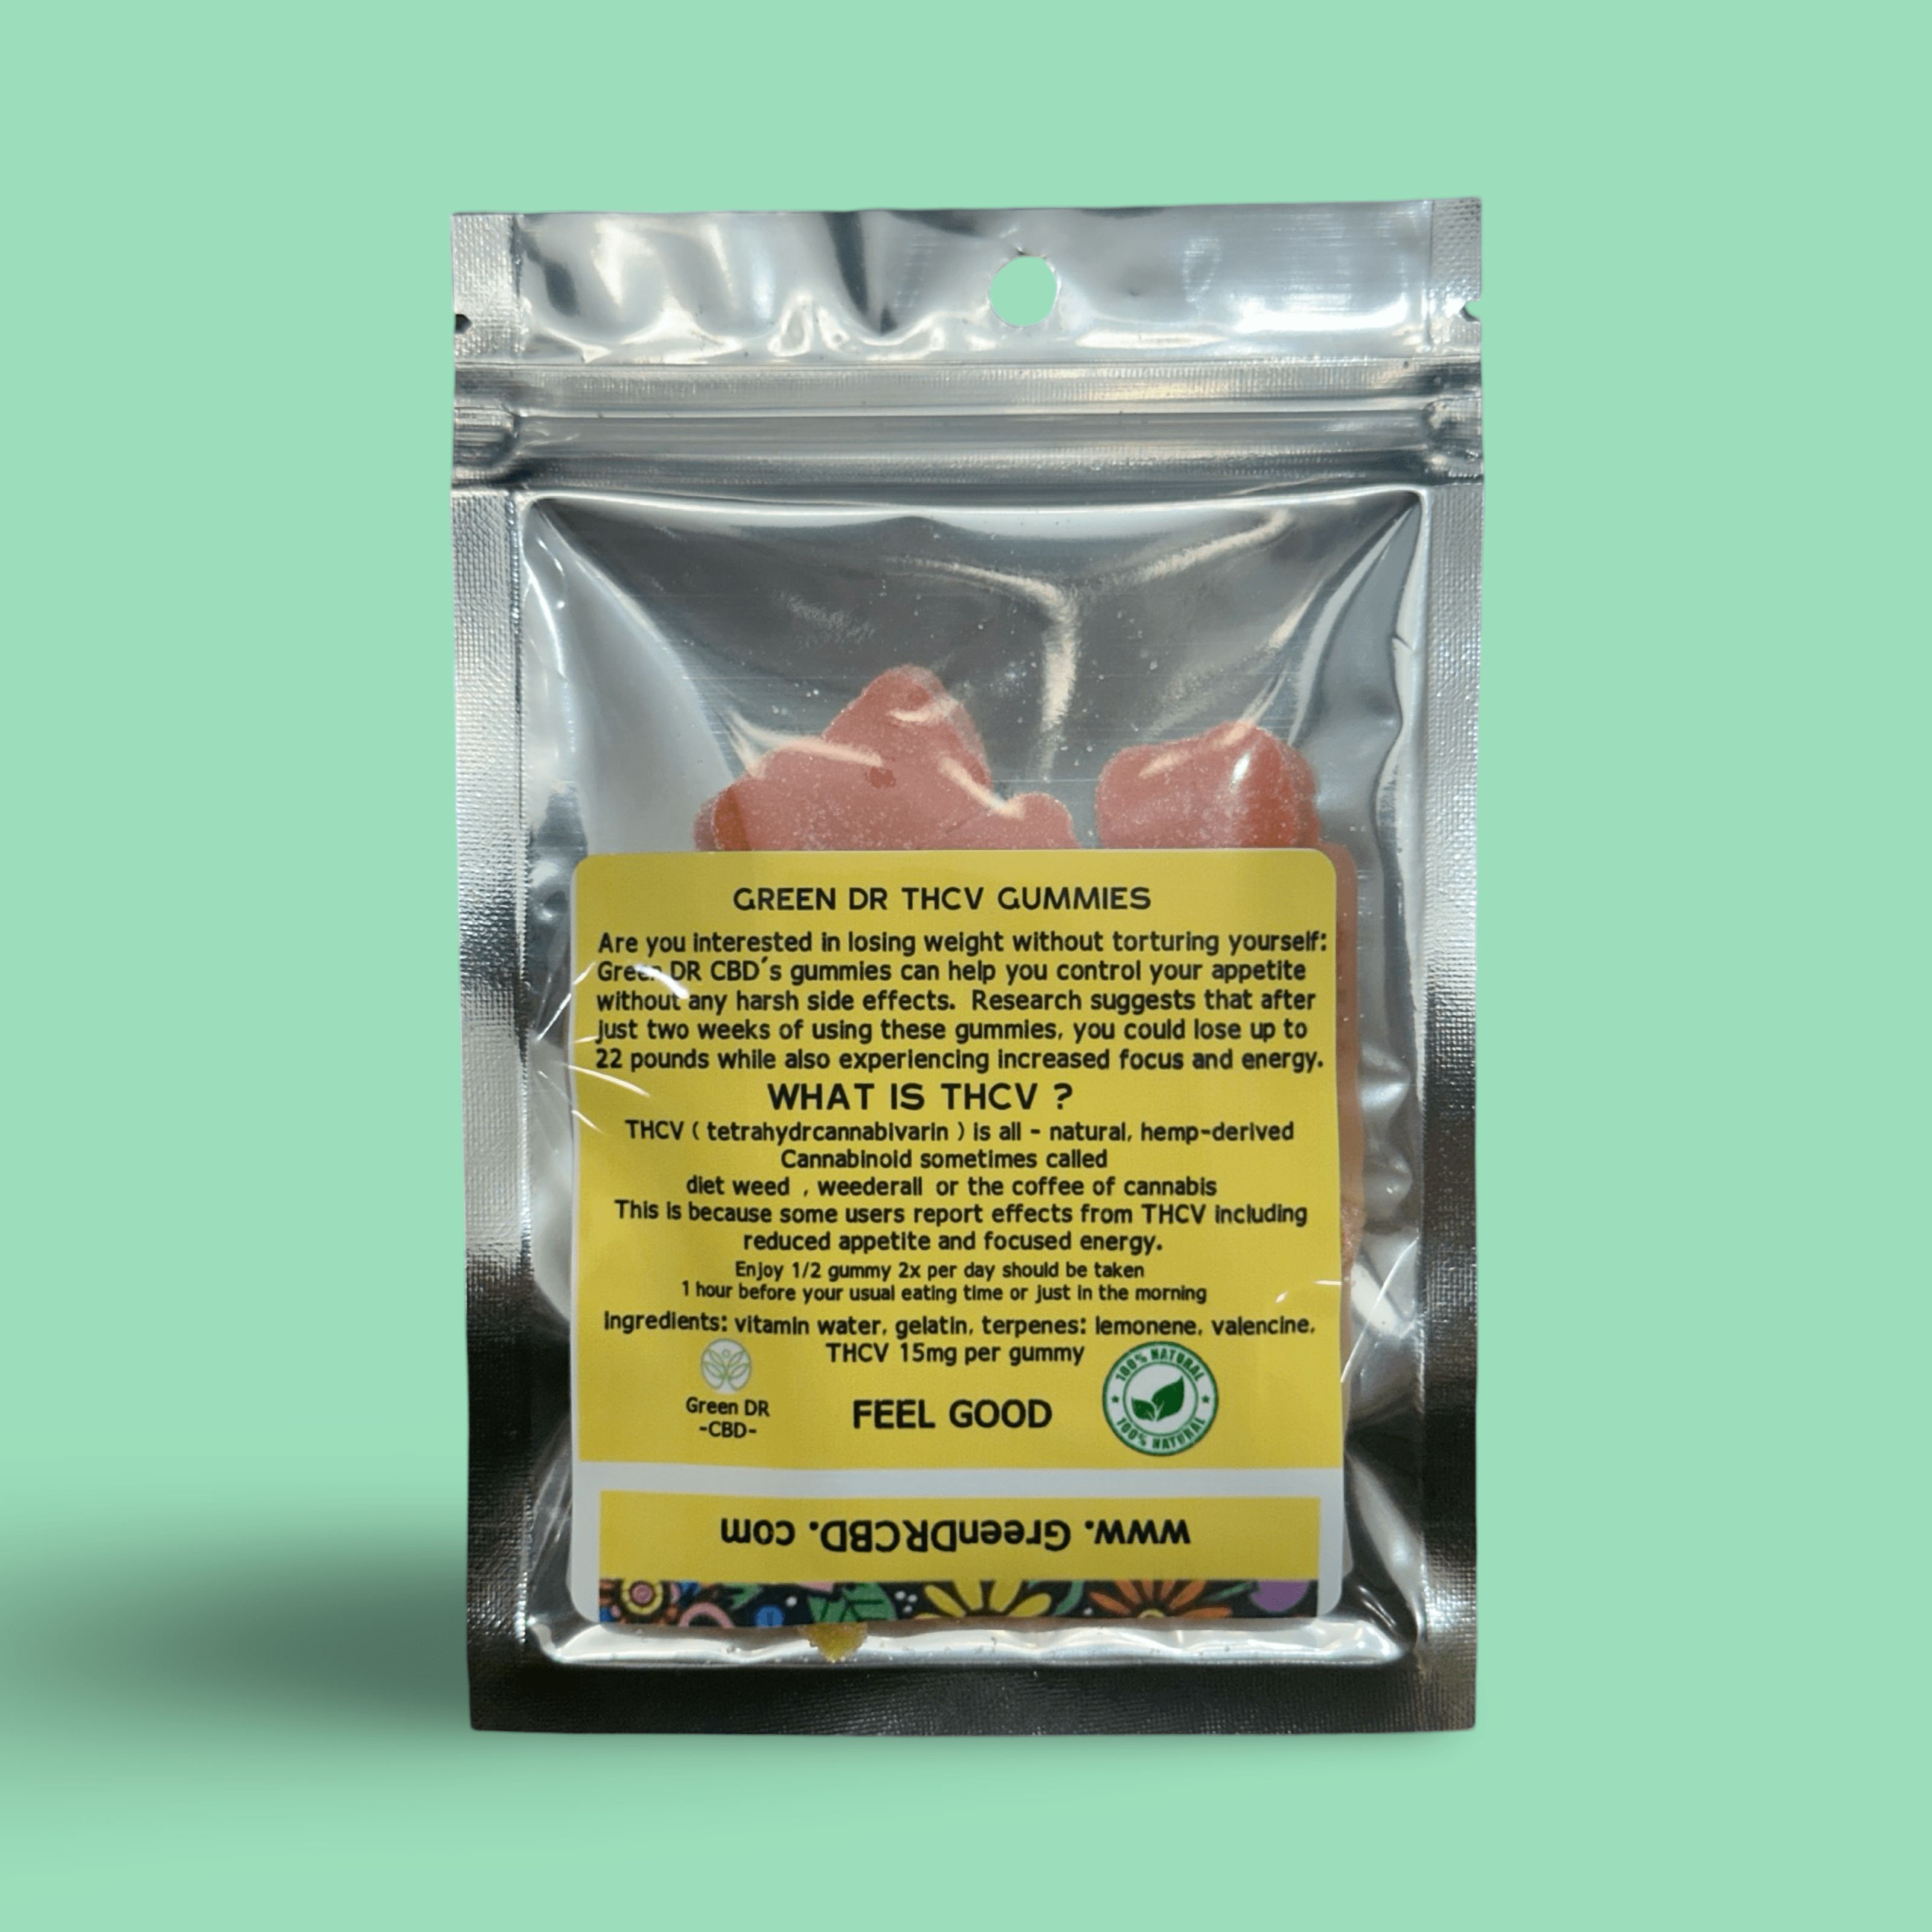 Best THCV gummies  Green DR SLIM BEAR 15mg THCV per gummy - The Original Green DR CBD